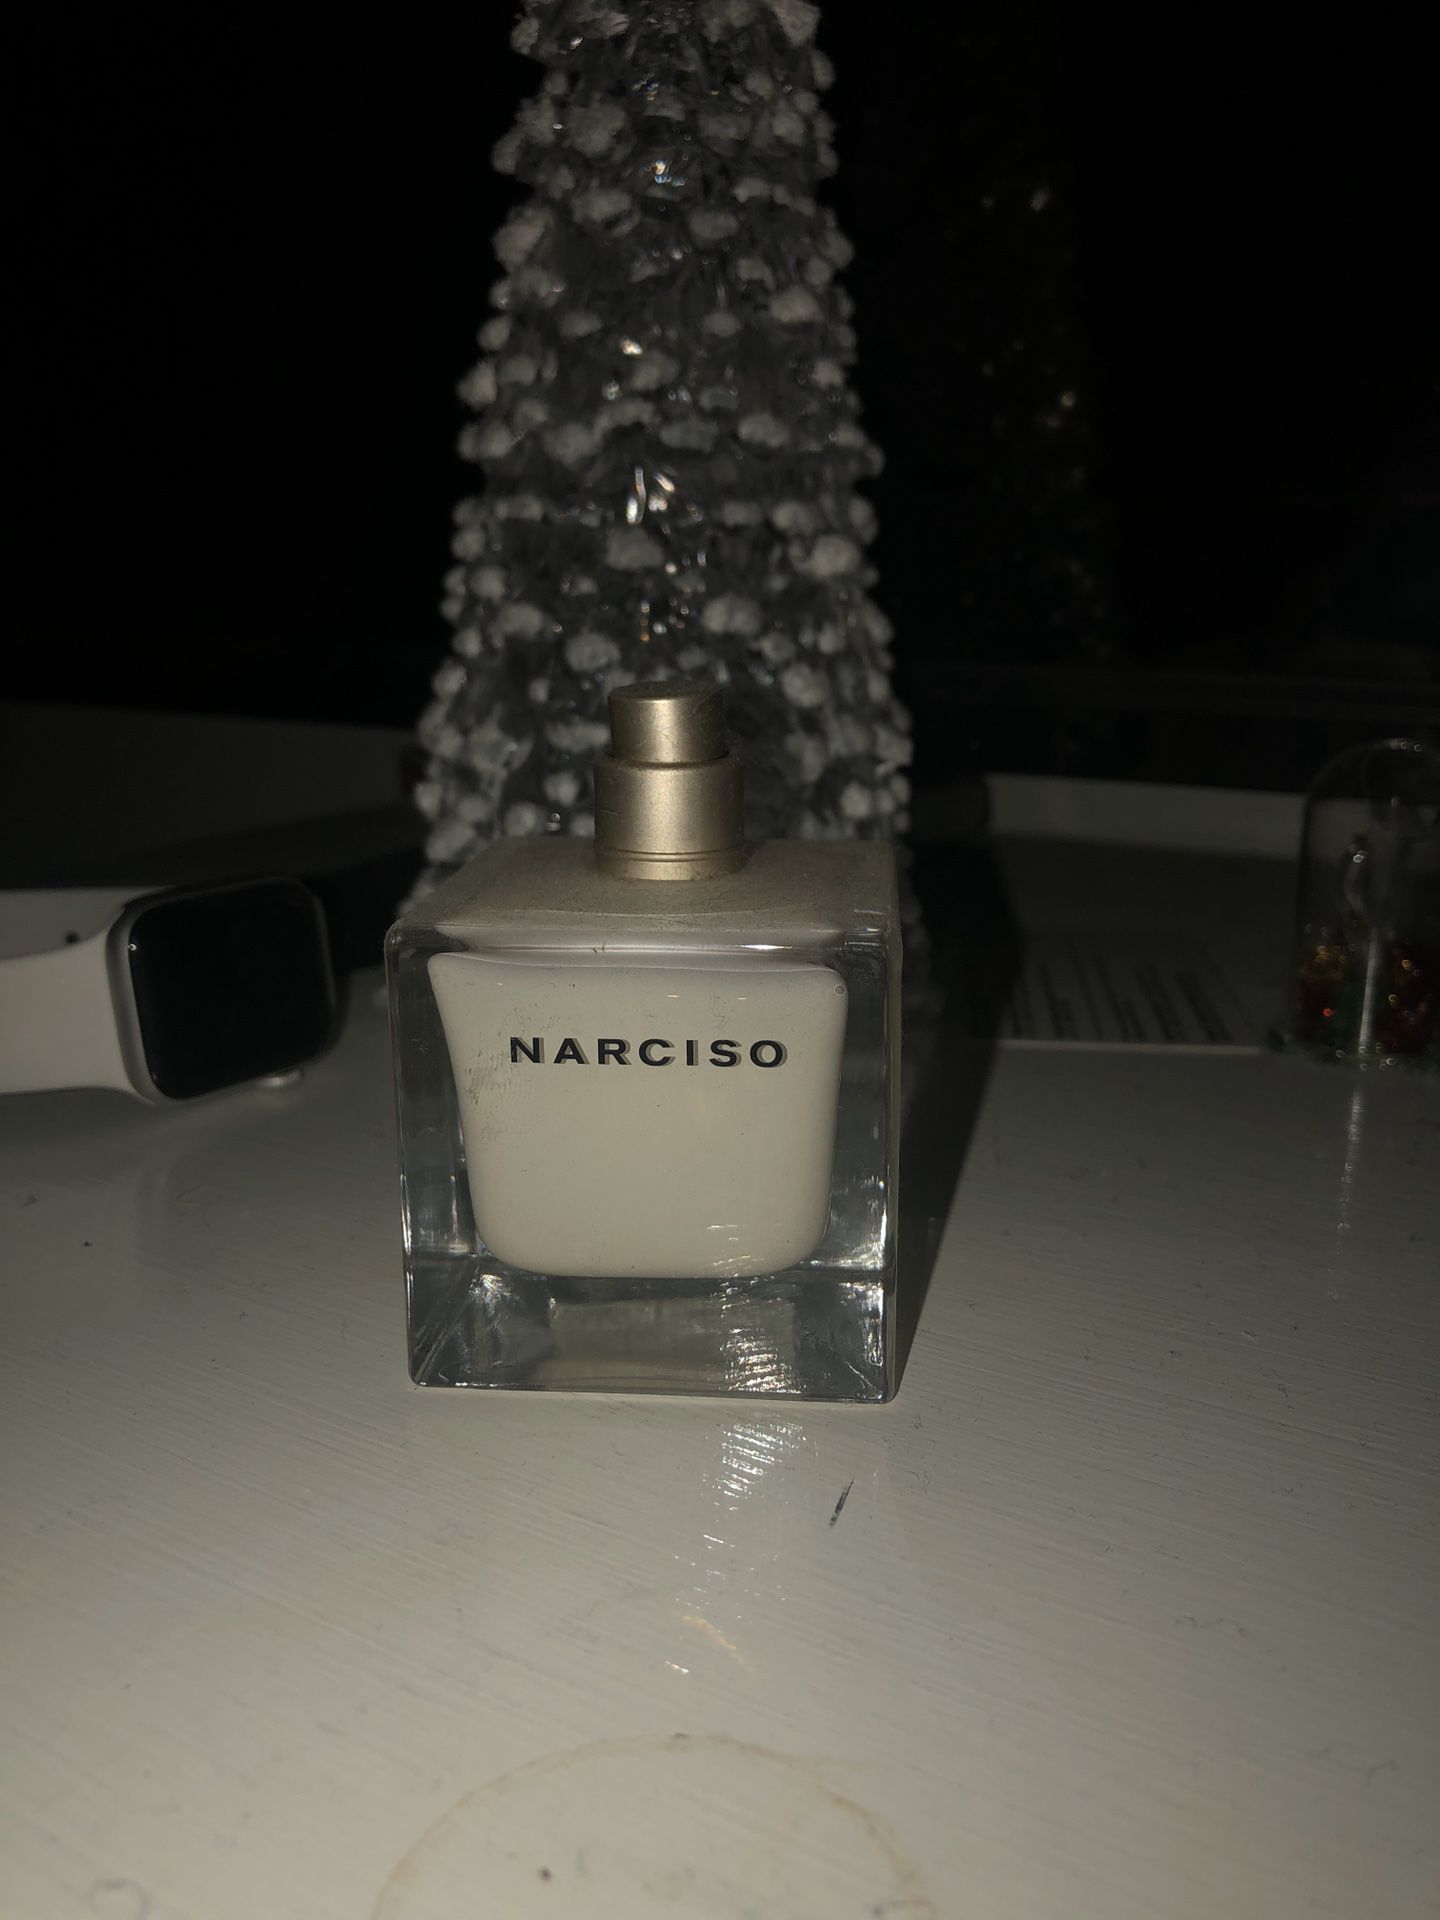 Narciso Perfume/ Cologne